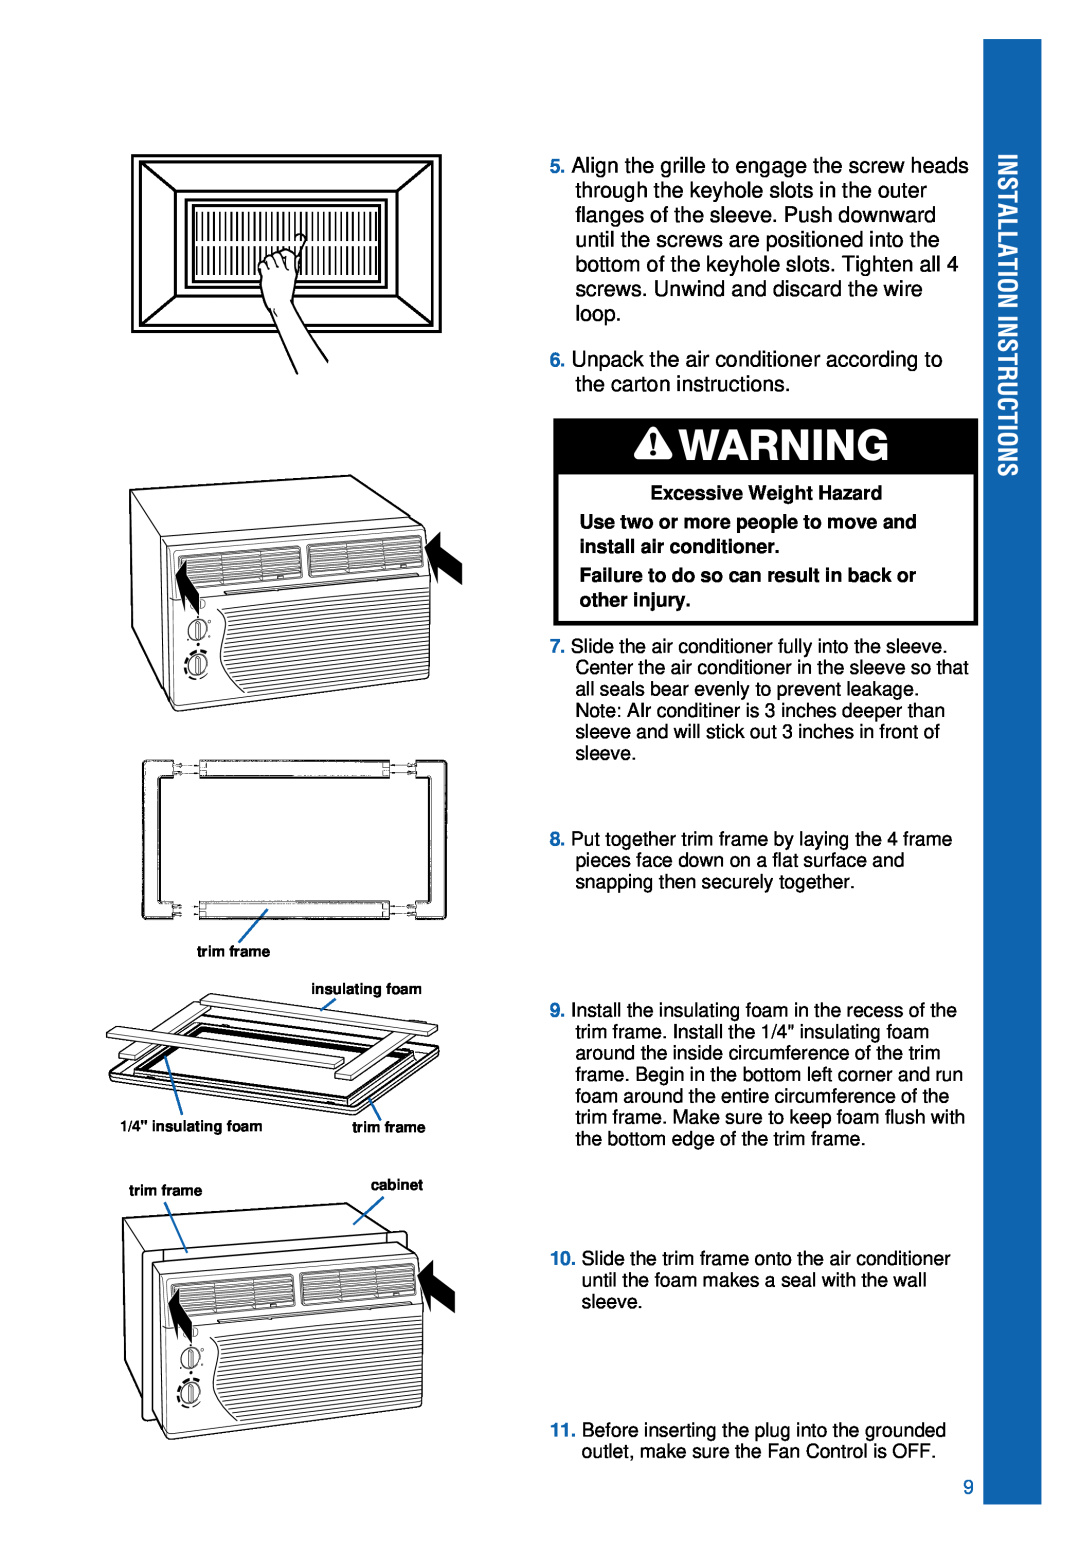 Whirlpool ACU124PK0 Installation Instructions, trim frame insulating foam, 1/4 insulating foam, cabinet 